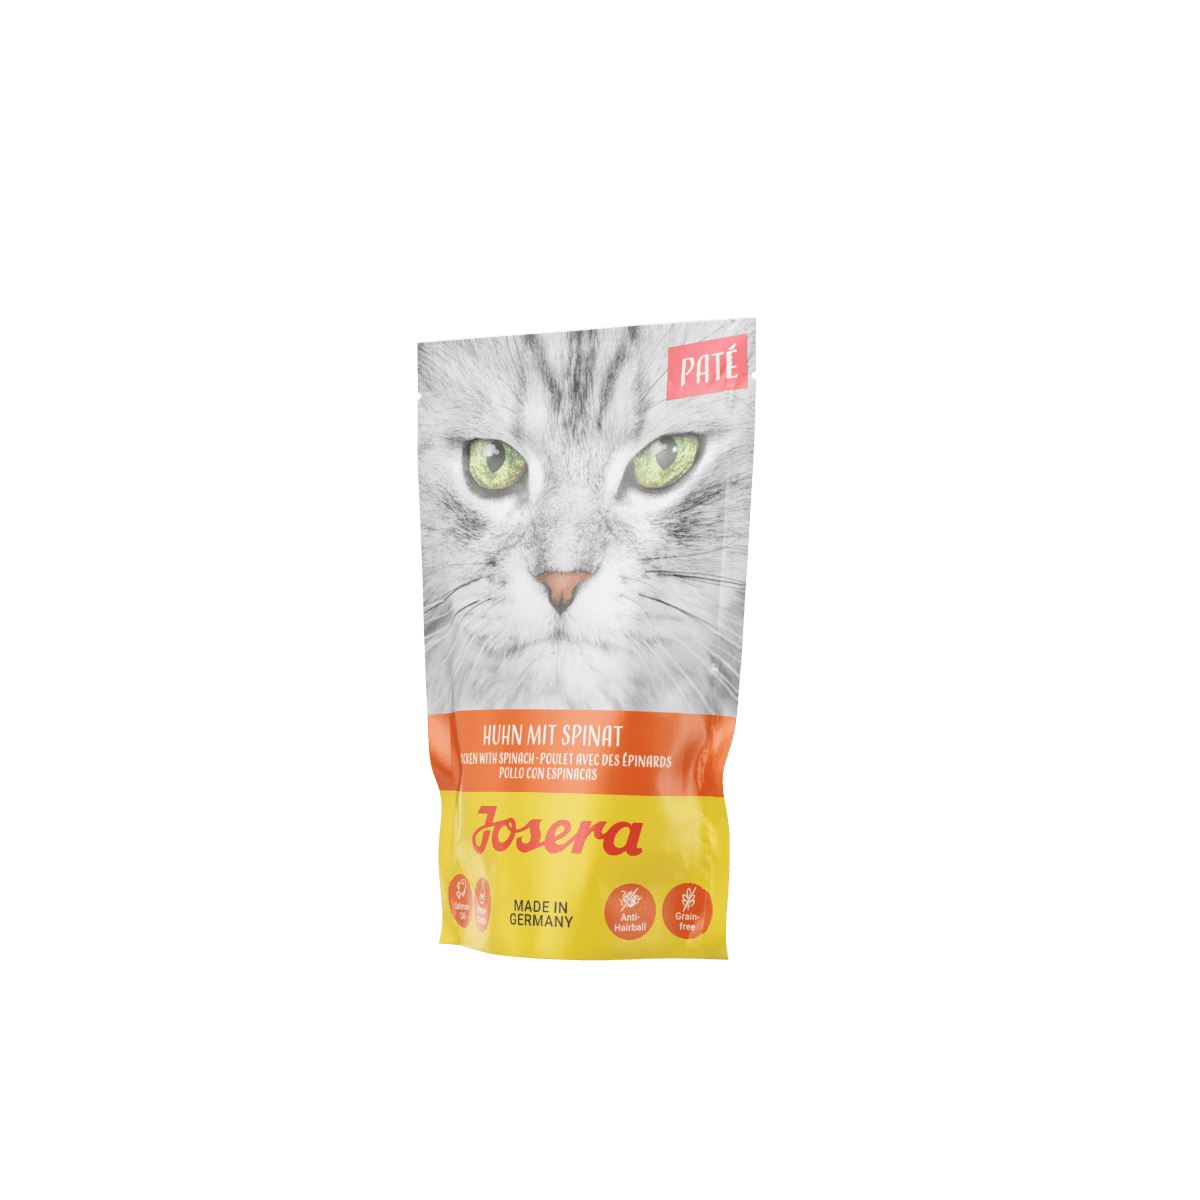 JOSERA Pate Huhn mit Spinat – паштет со вкусом курицы и шпината для взрослых кошек